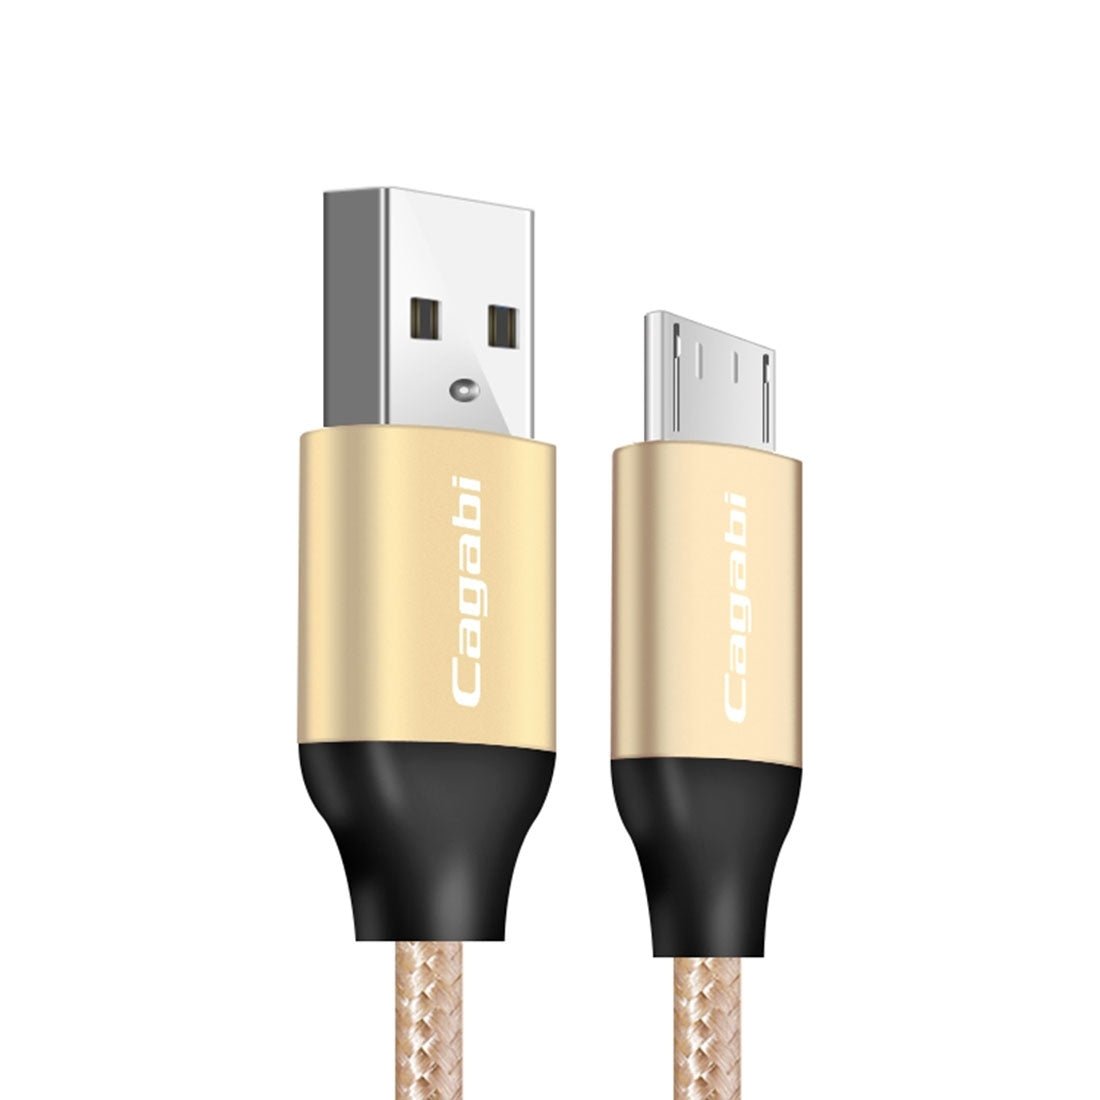 Ladekabel Micro-USB, 3m, rund, Farbe Gold - Calitronshop.com